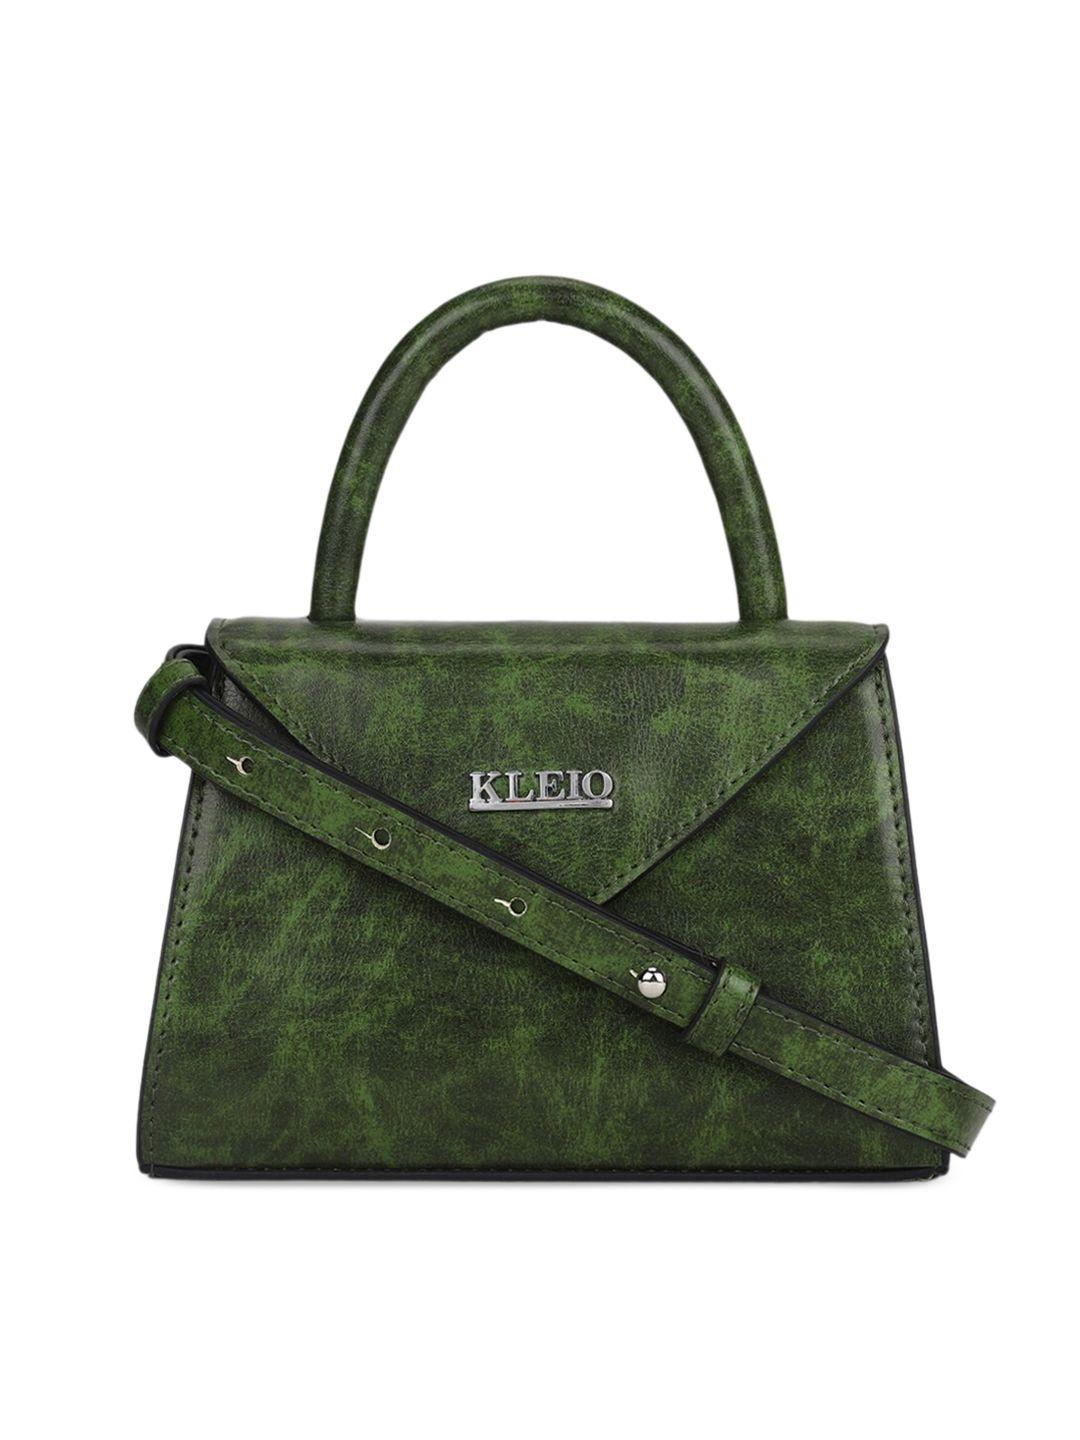 kleio olive green textured structured handheld bag